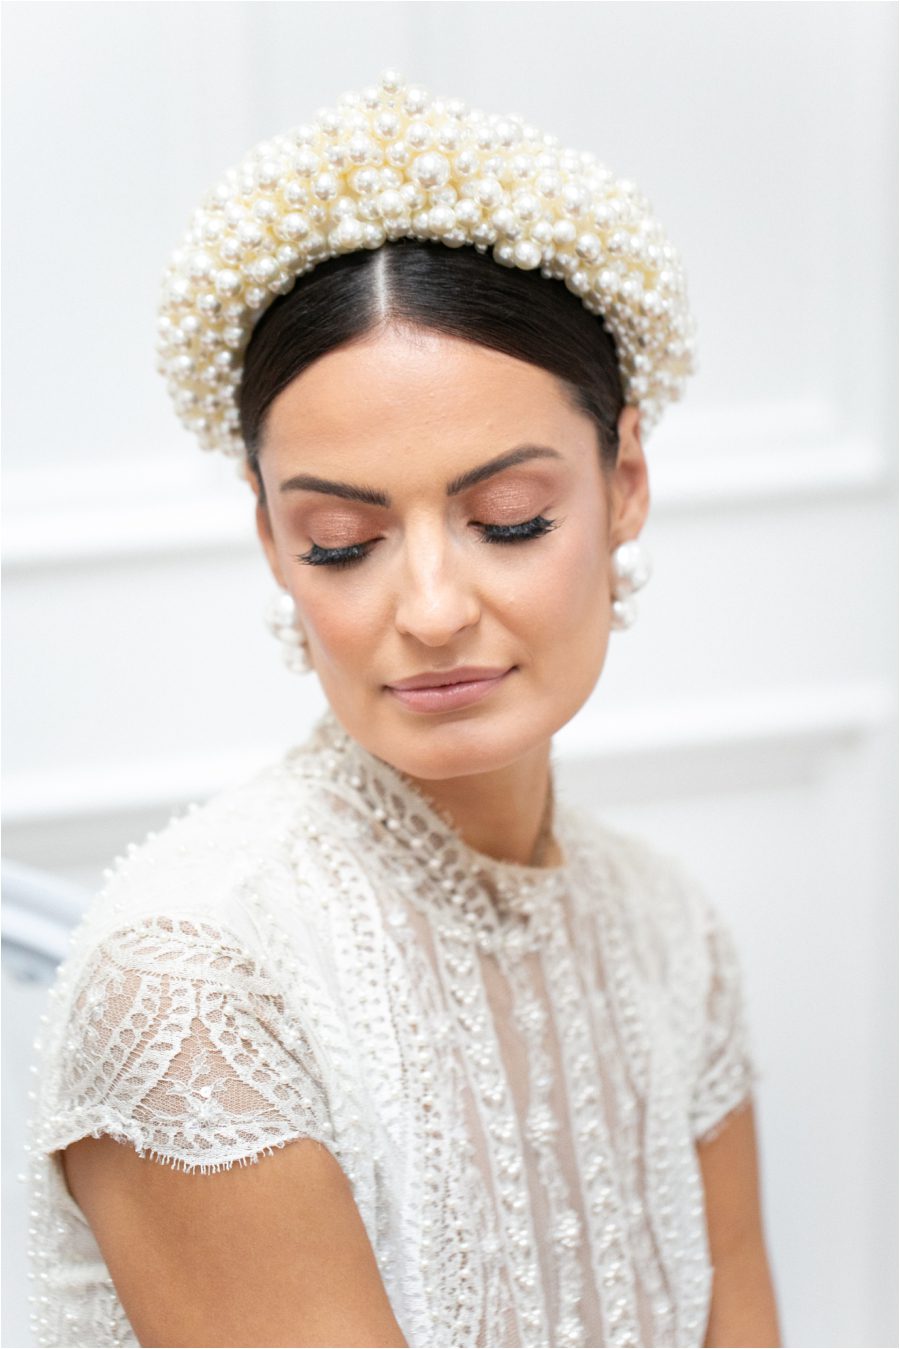 Pearl headband for a modern bride